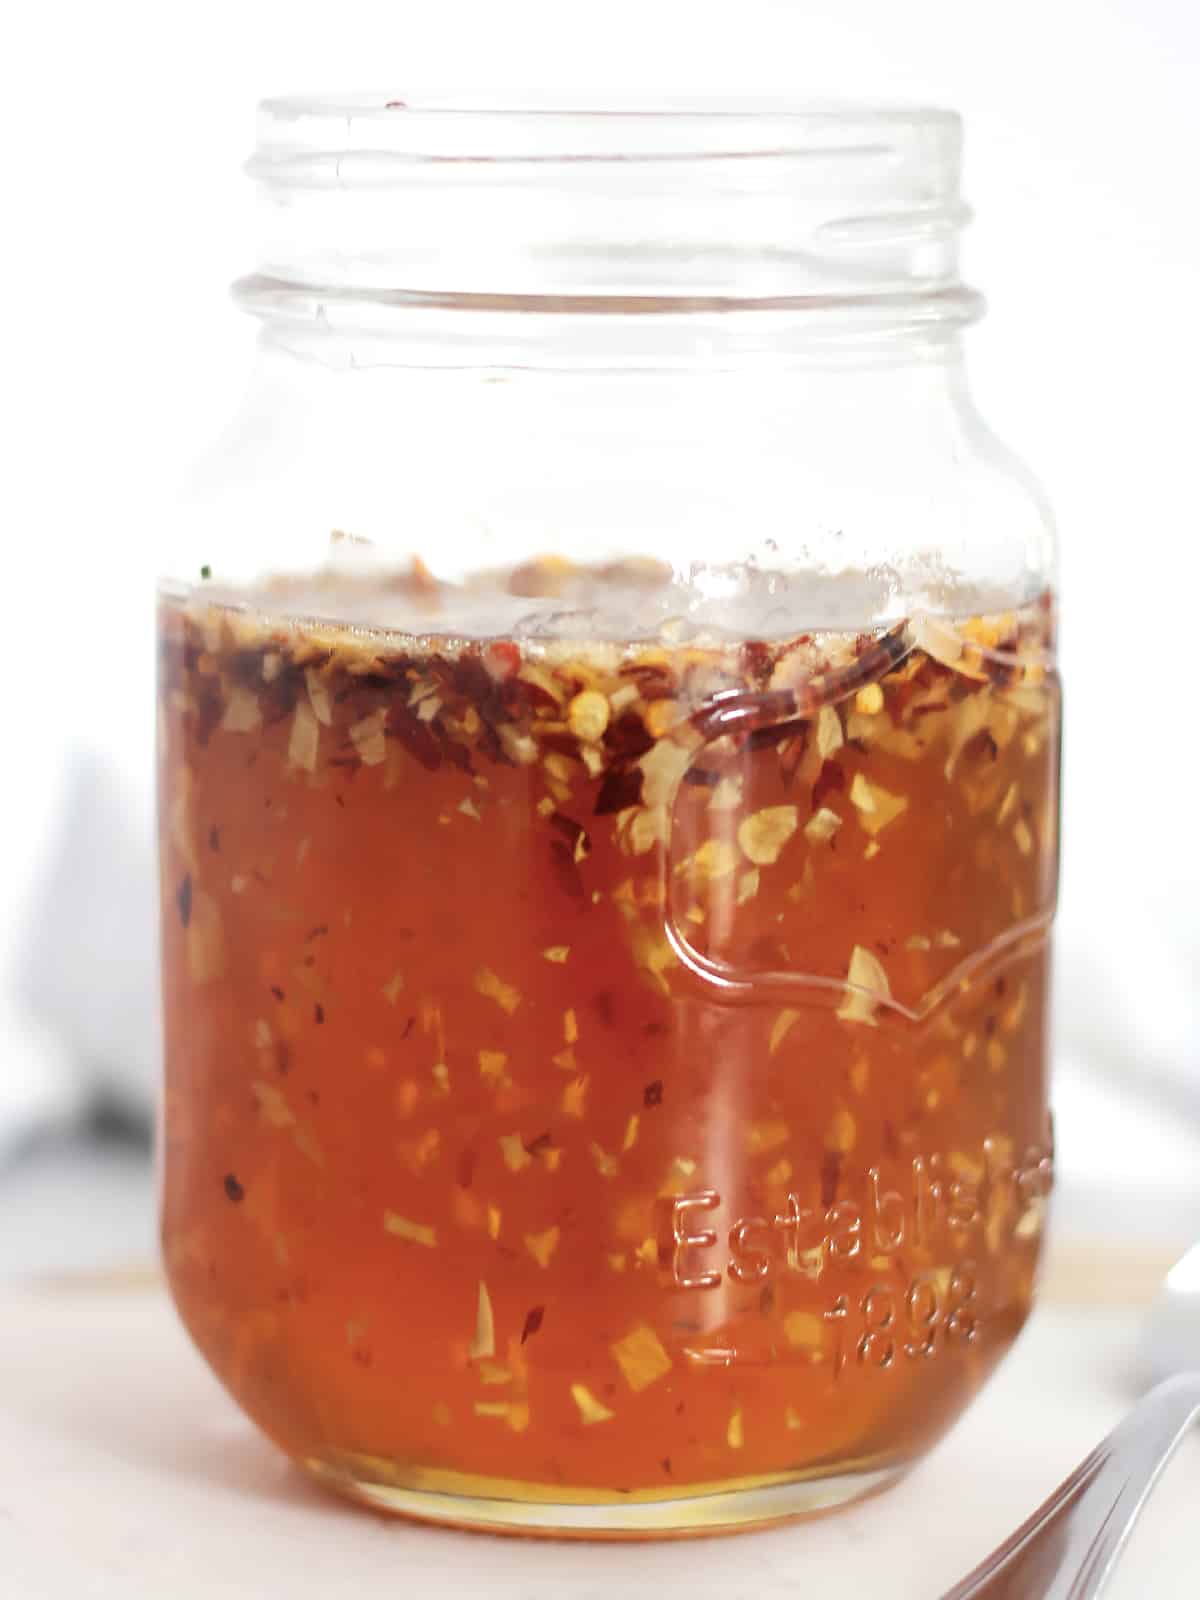 Spicy Hot Honey Sauce Recipe (Garlic and Chili Infused Honey)